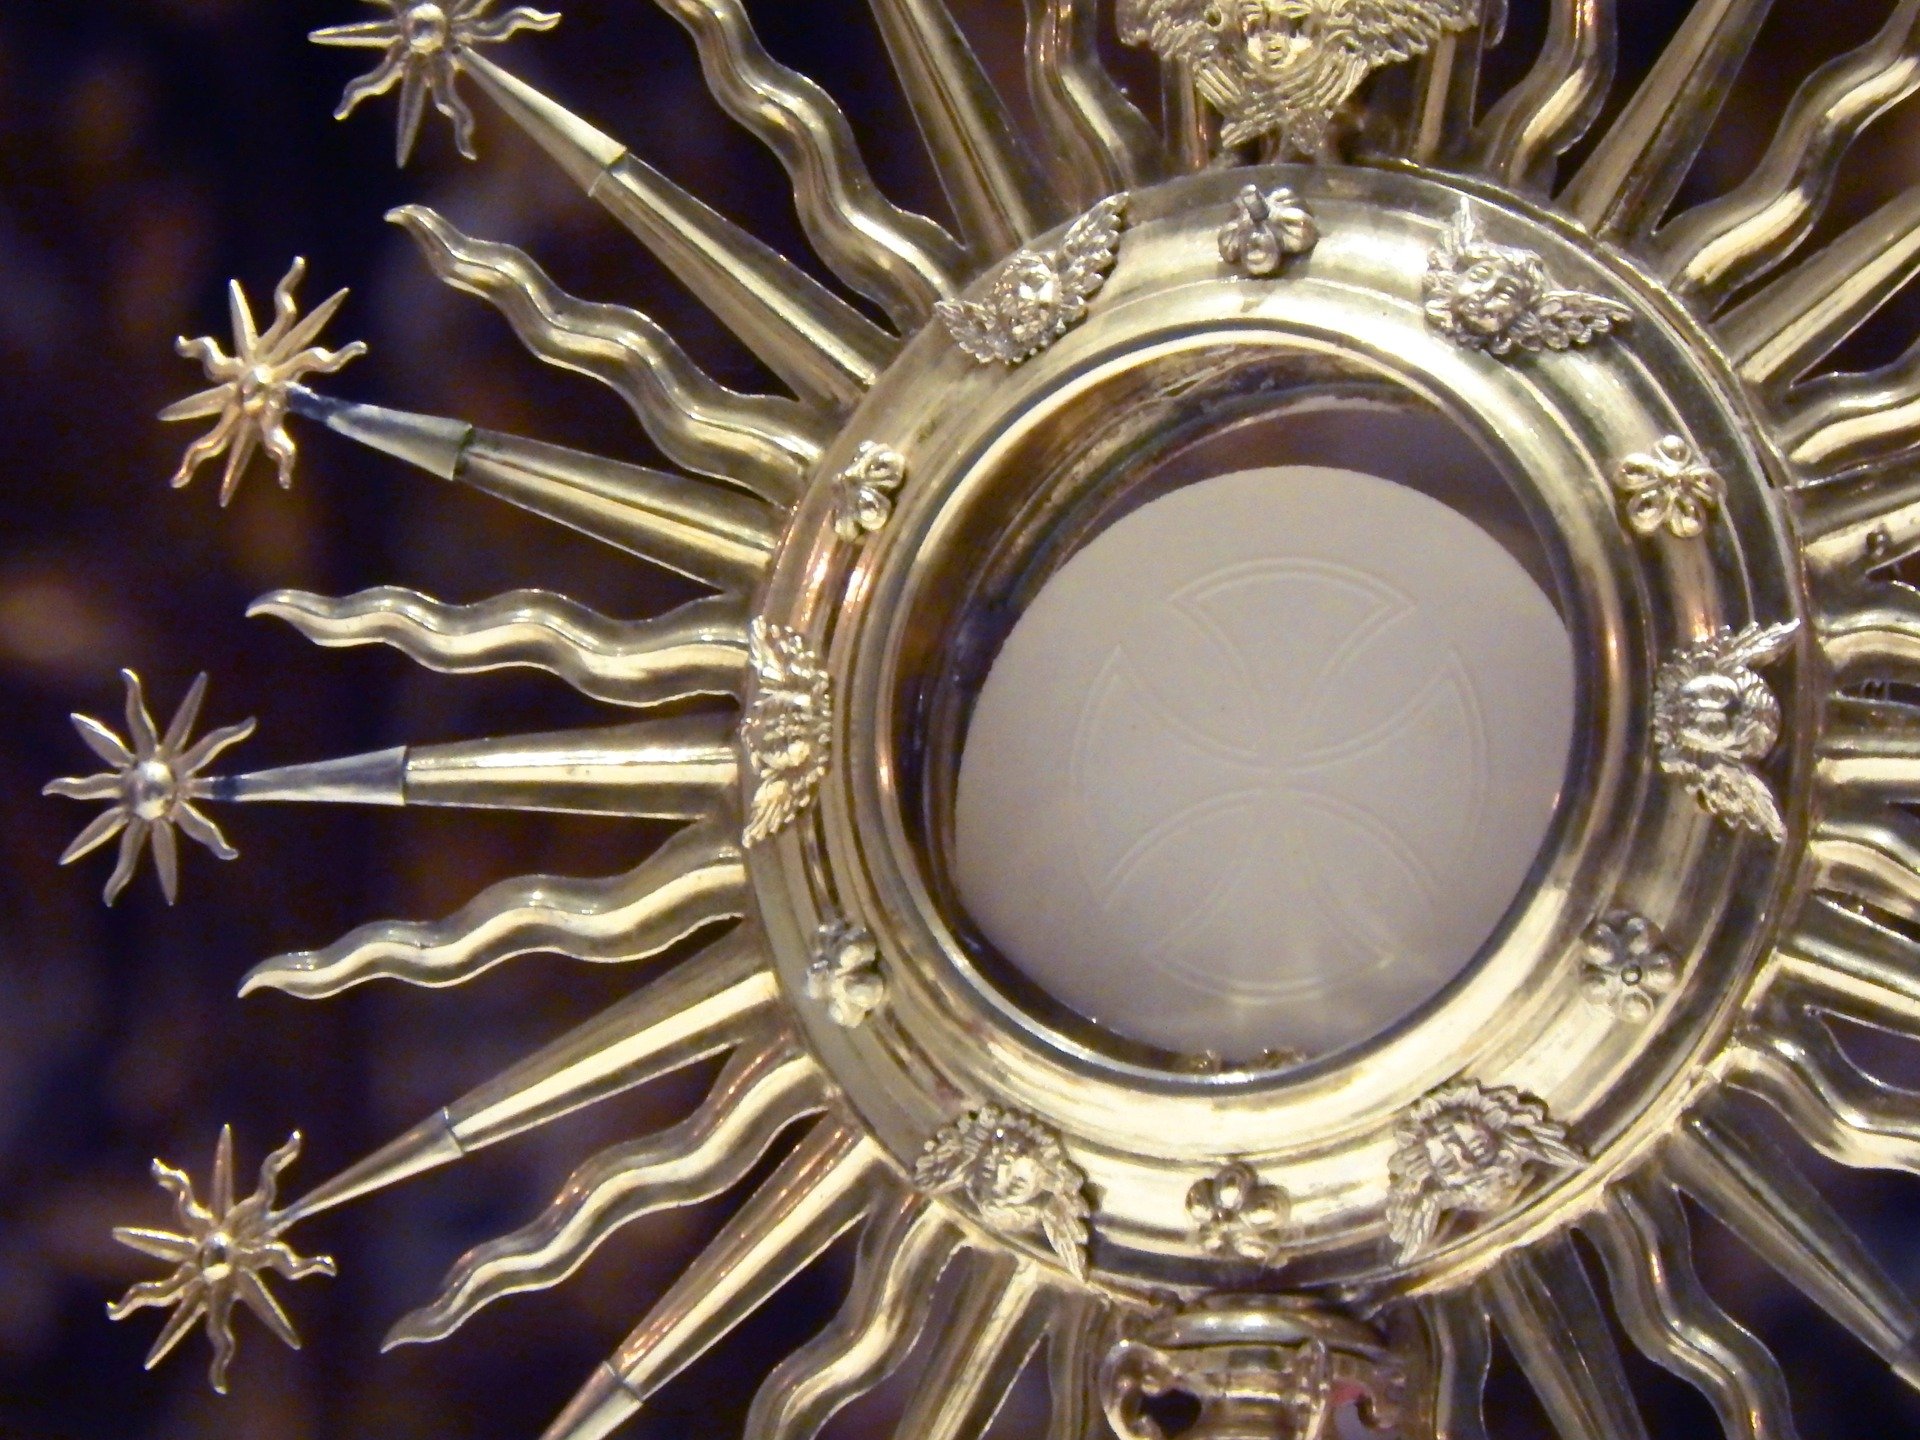 eucharist-3215813_1920 (c) thm